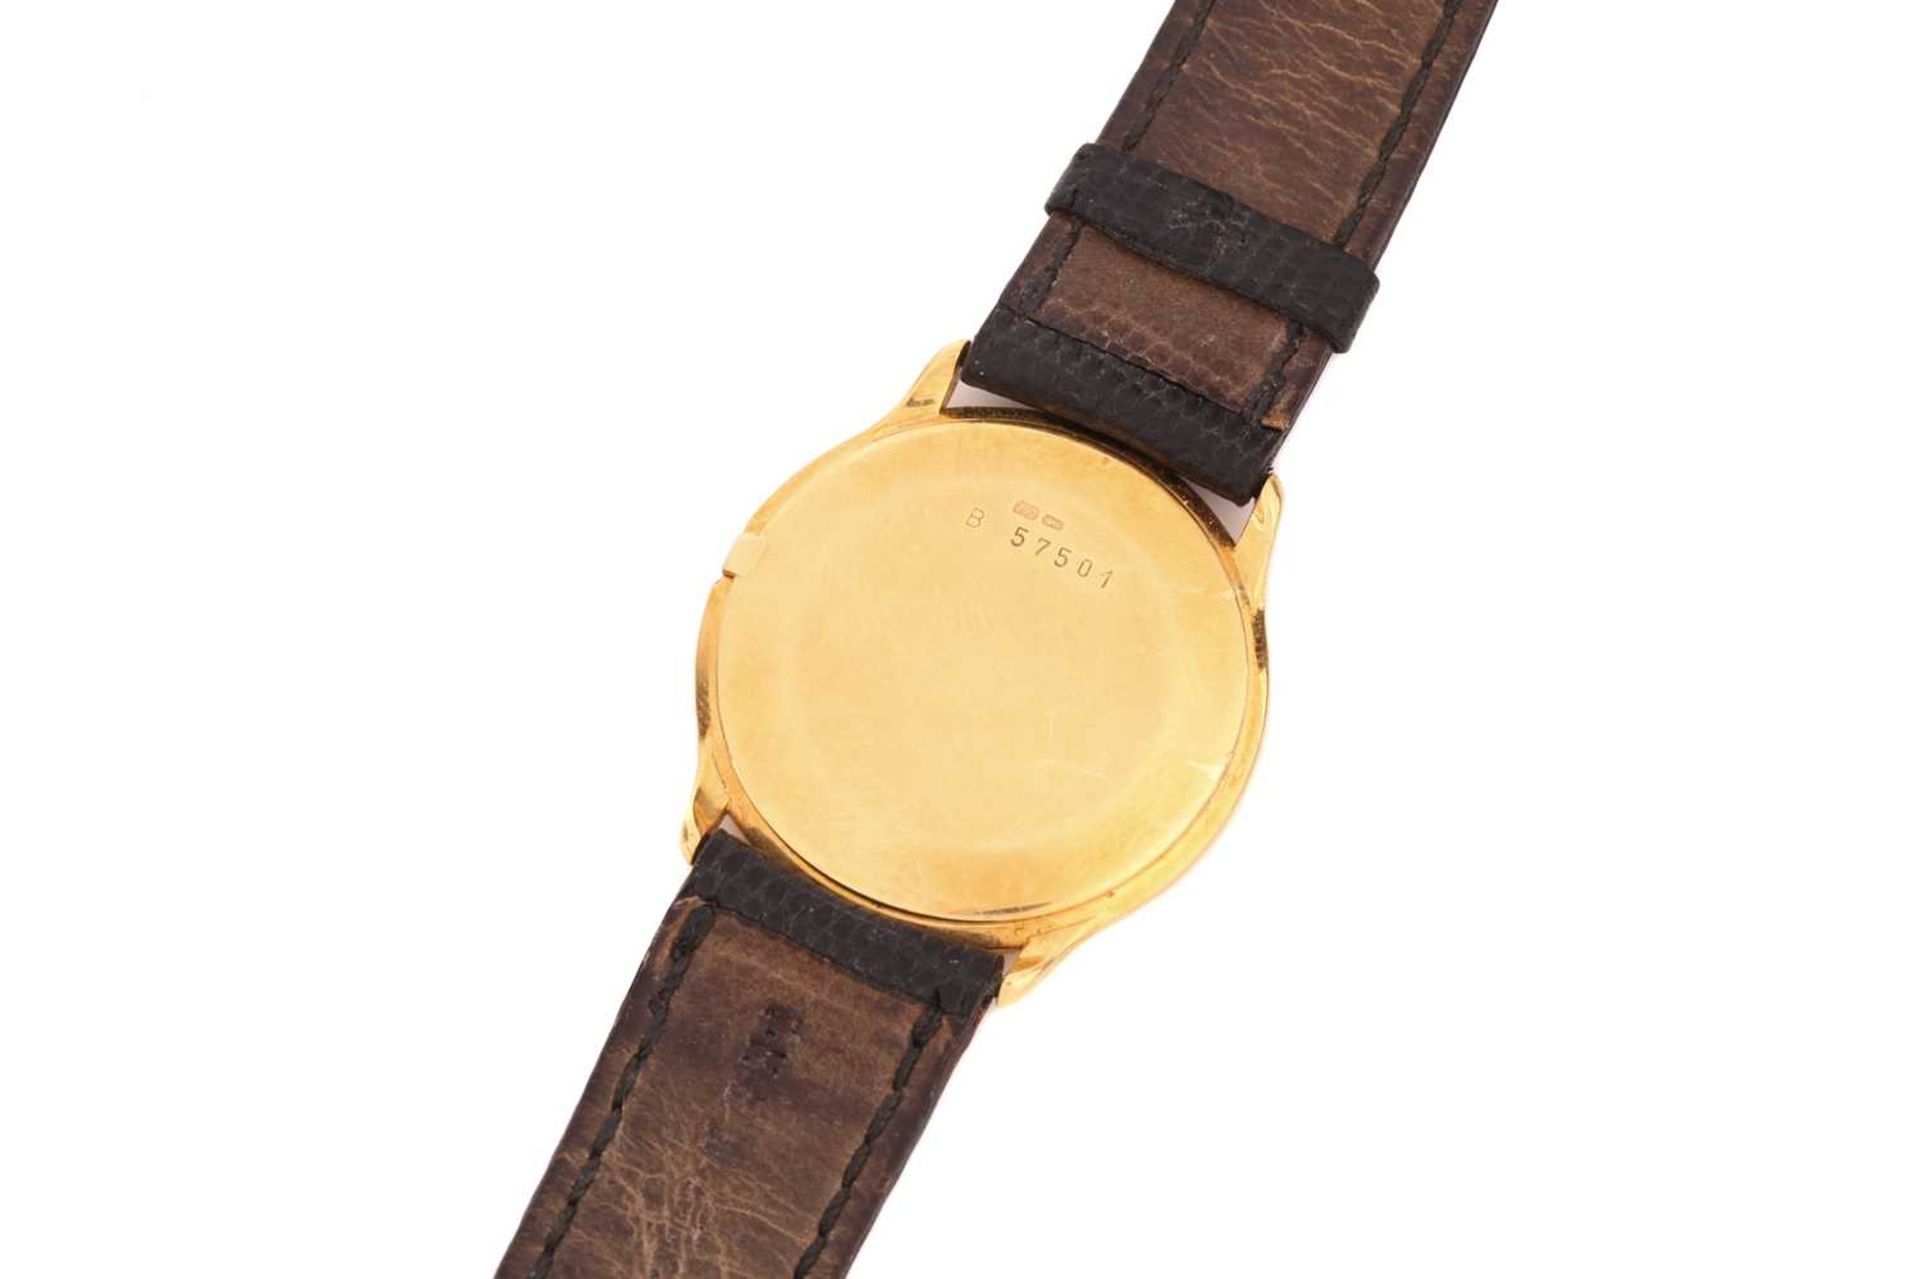 An Audemars Piguet gold dress watch, featuring a hand-wound ultra-thin movement in a yellow metal - Image 9 of 11